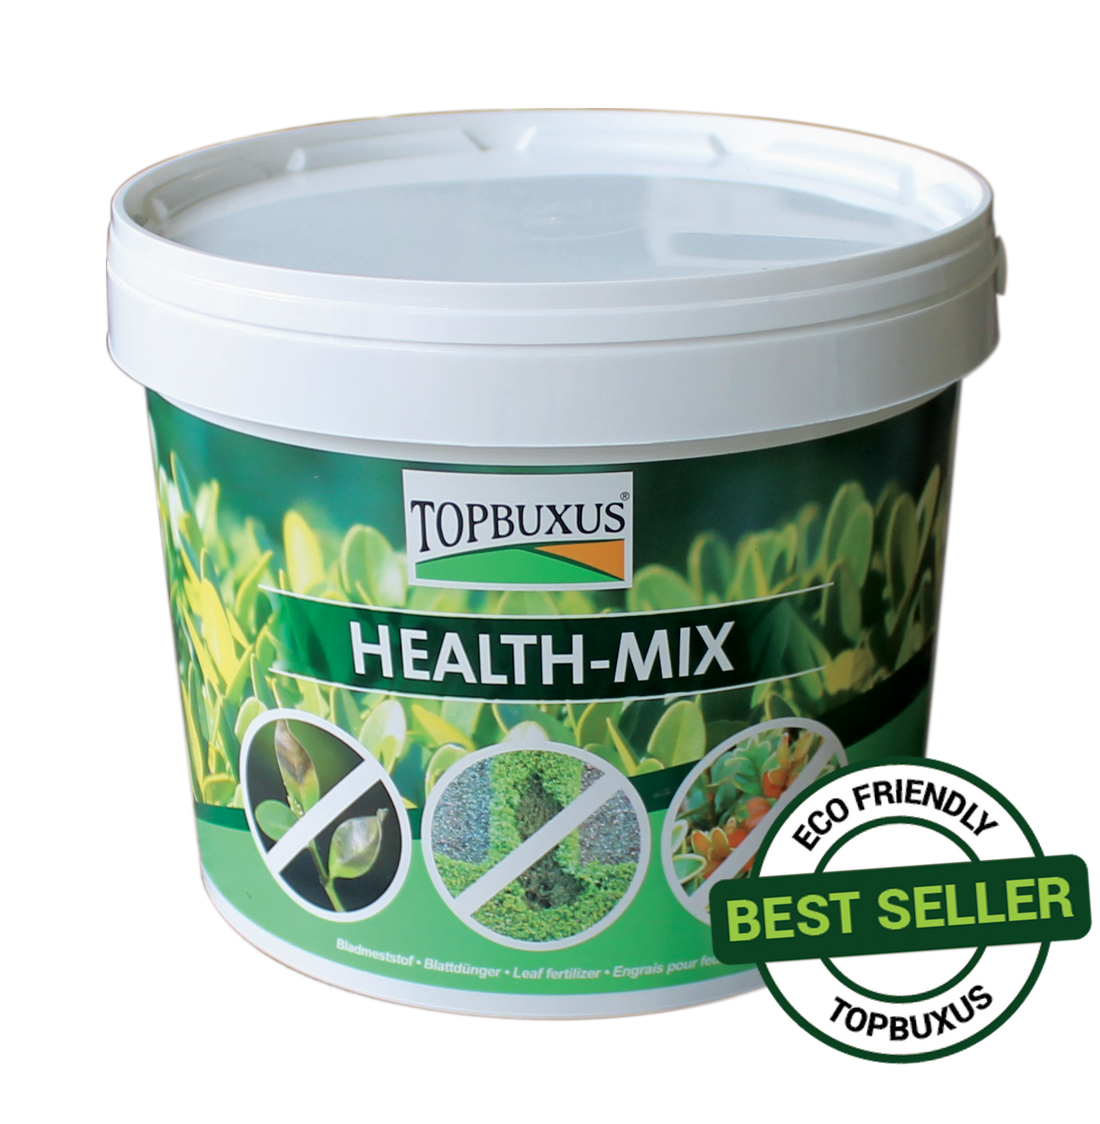 Topbuxus Health-Mix - 40 Tab Bucket